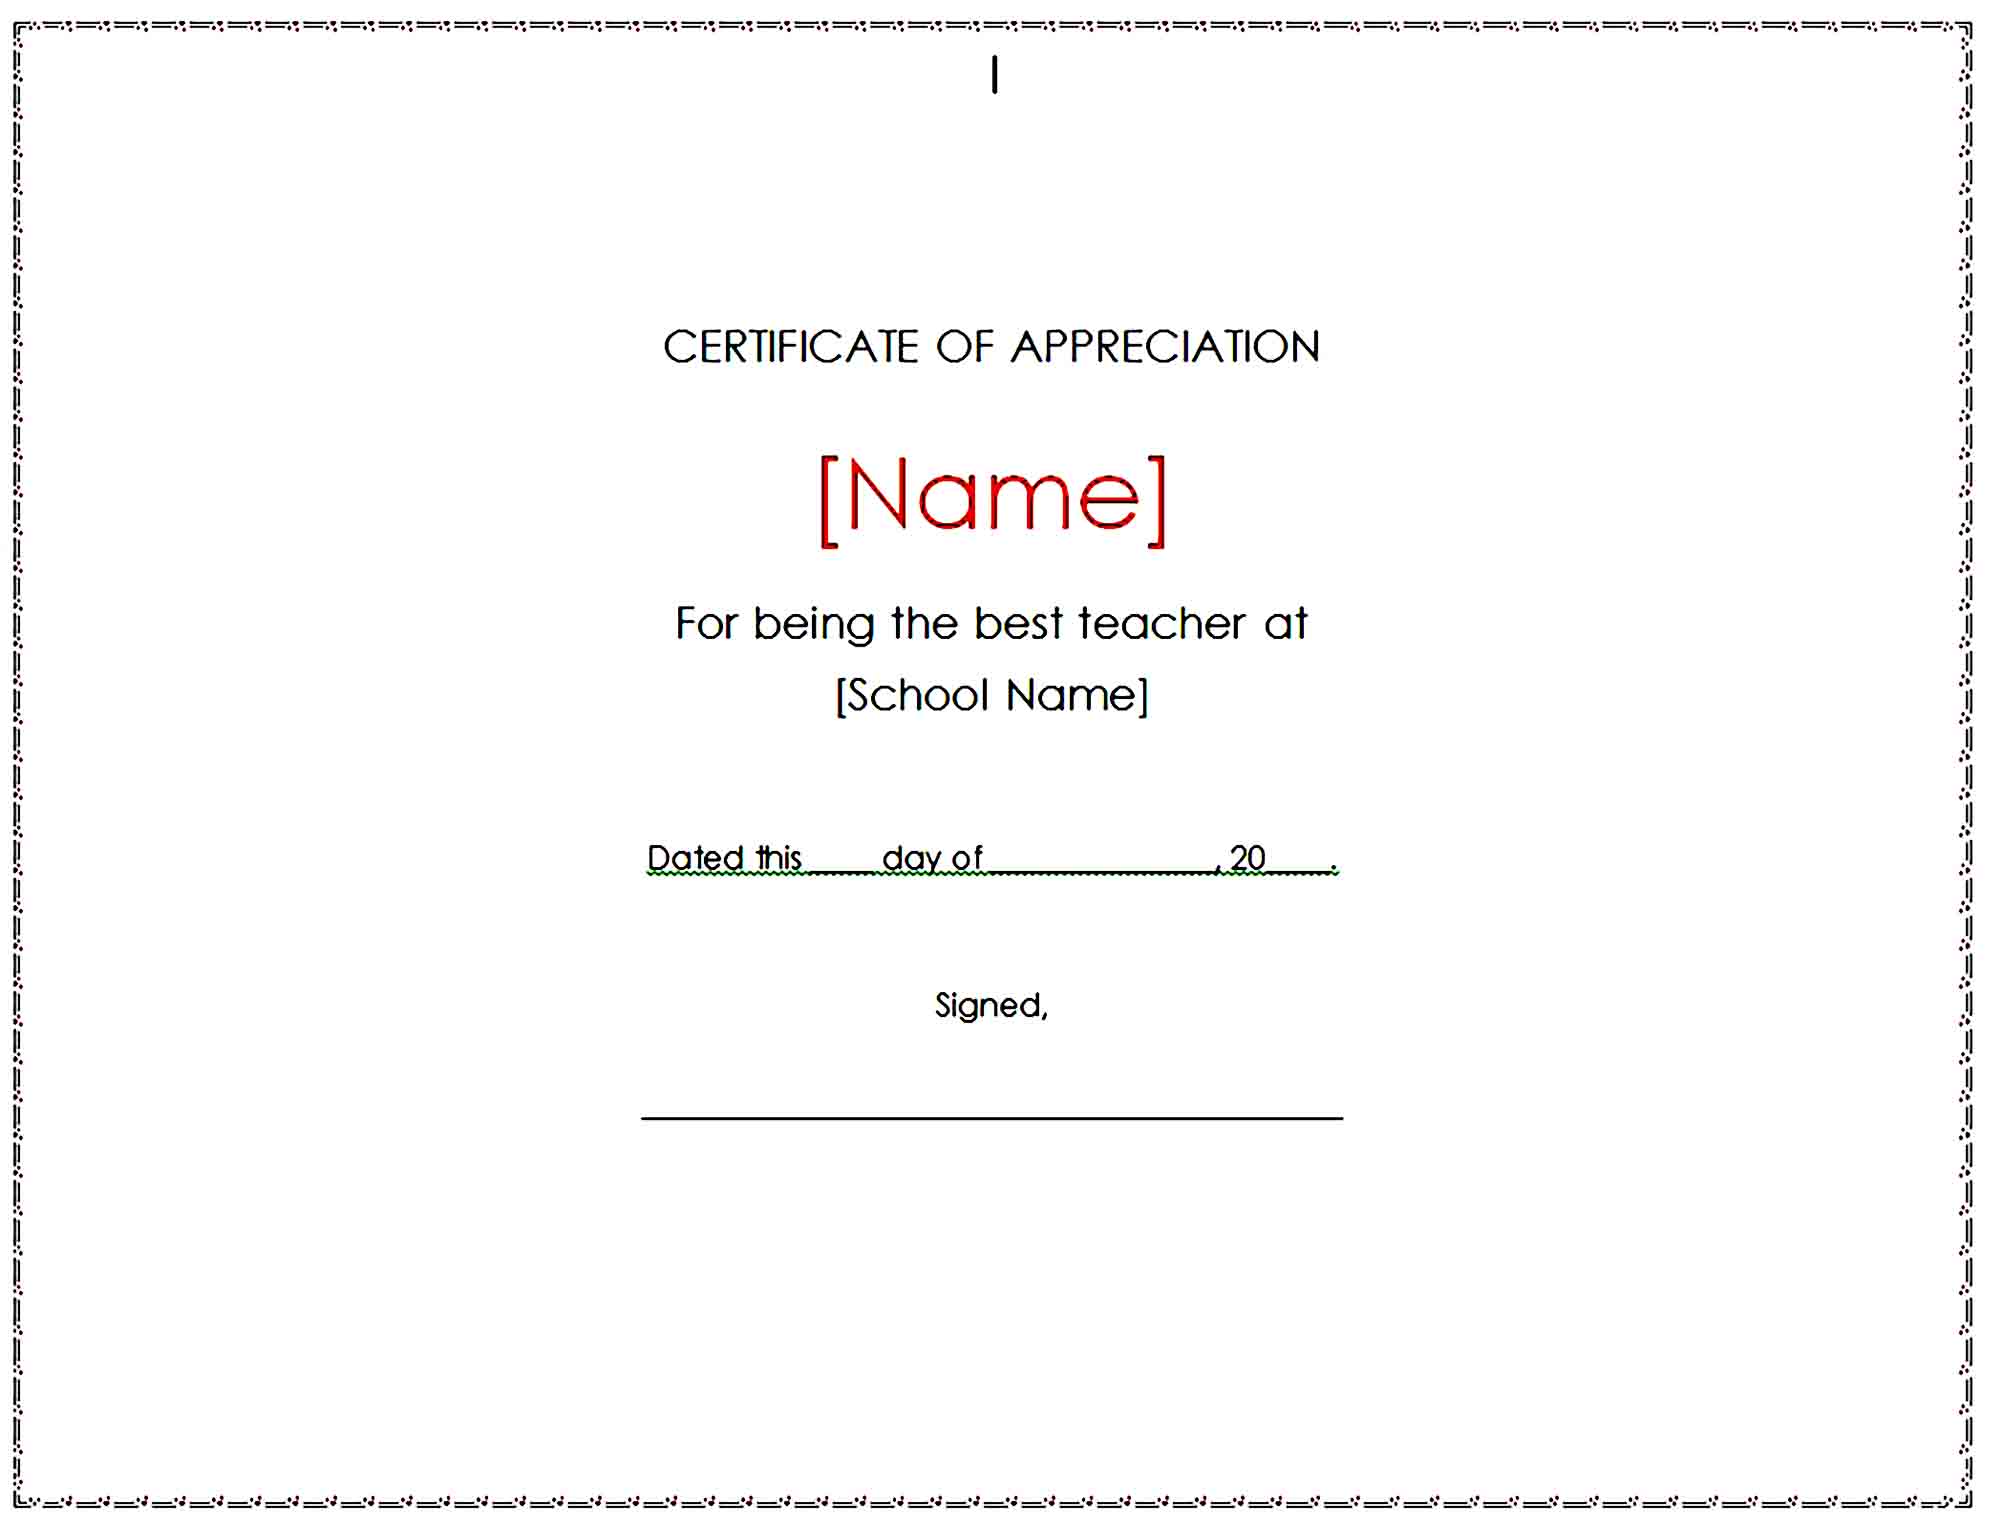 Certificate of Appreciation 09